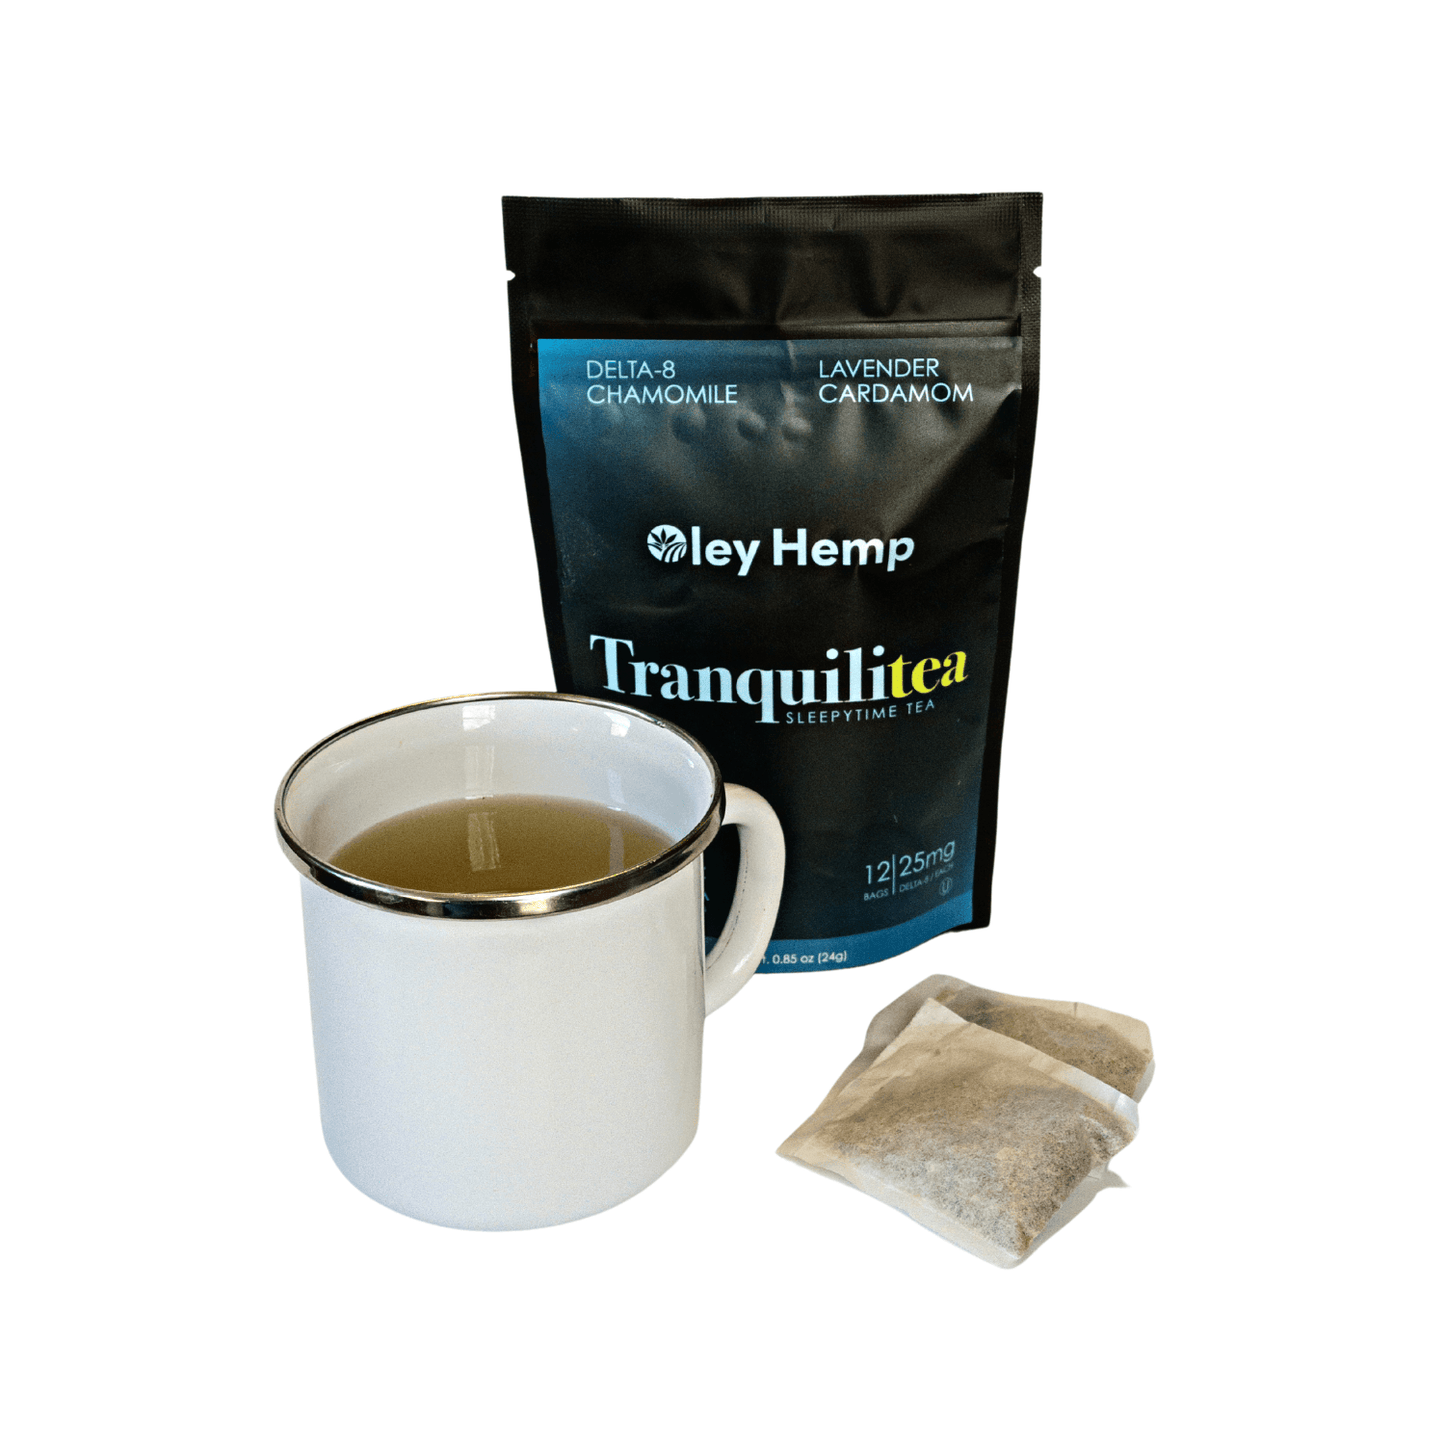 Tranquilitea - Sleepytime Tea - Oley Hemp